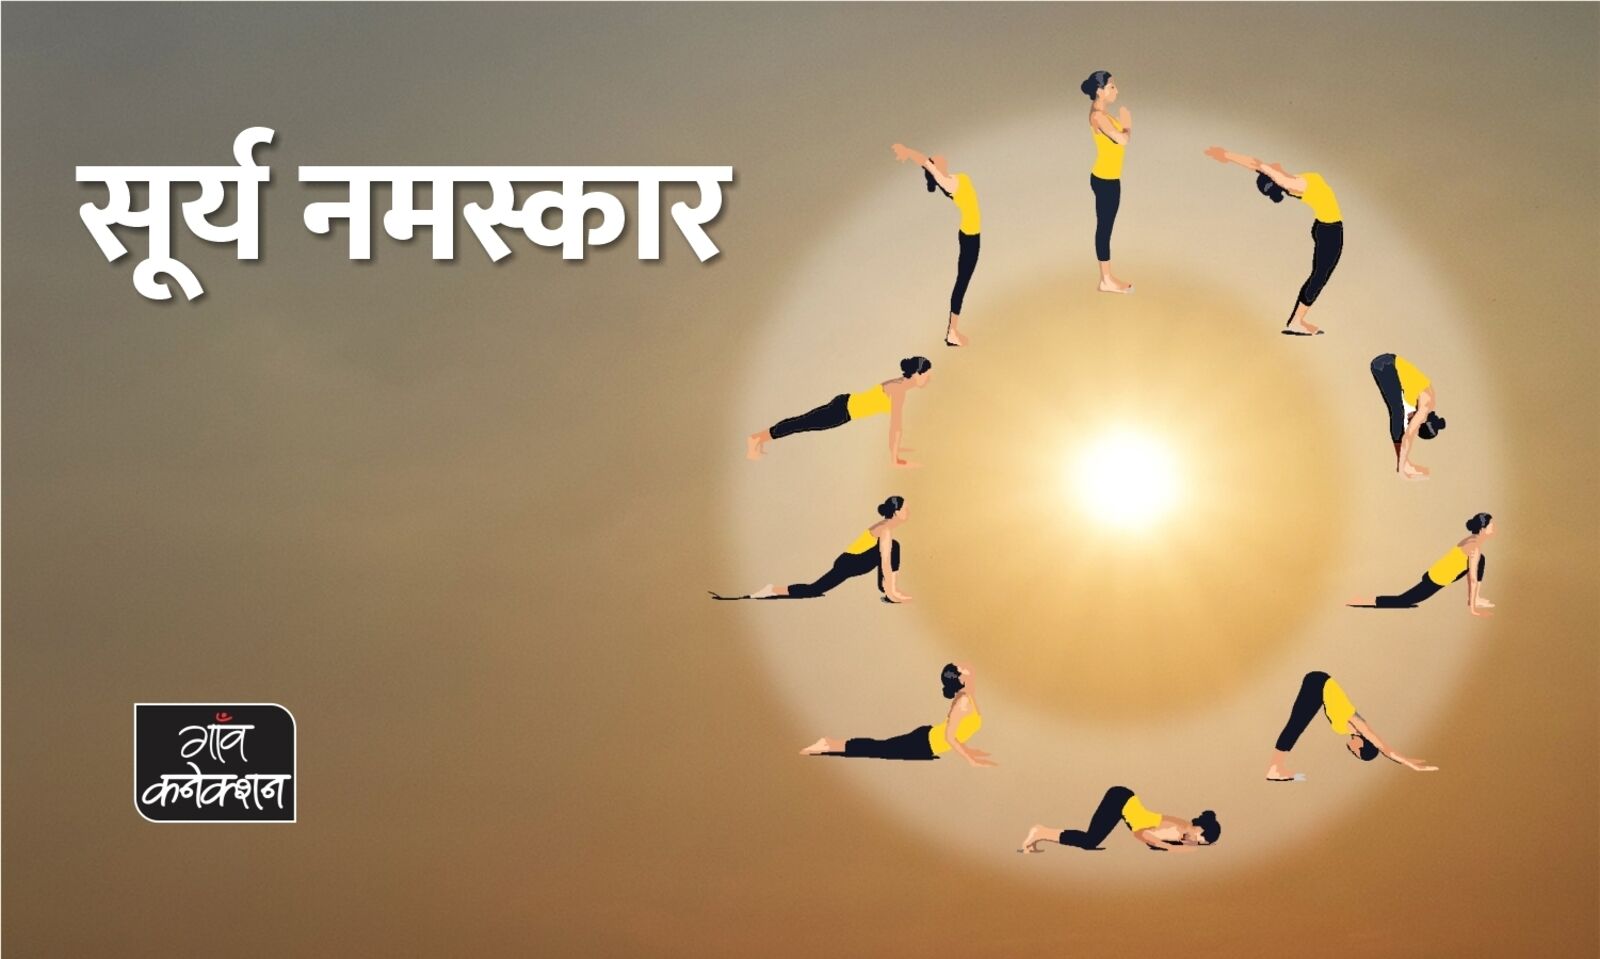 YOGA SESSION: बच्चों के शारीरिक विकास के लिए बहुत जरूरी है सूर्य नमस्कार -  yoga session with savita yadav surya namaskar for physical development of  kids kee – News18 हिंदी